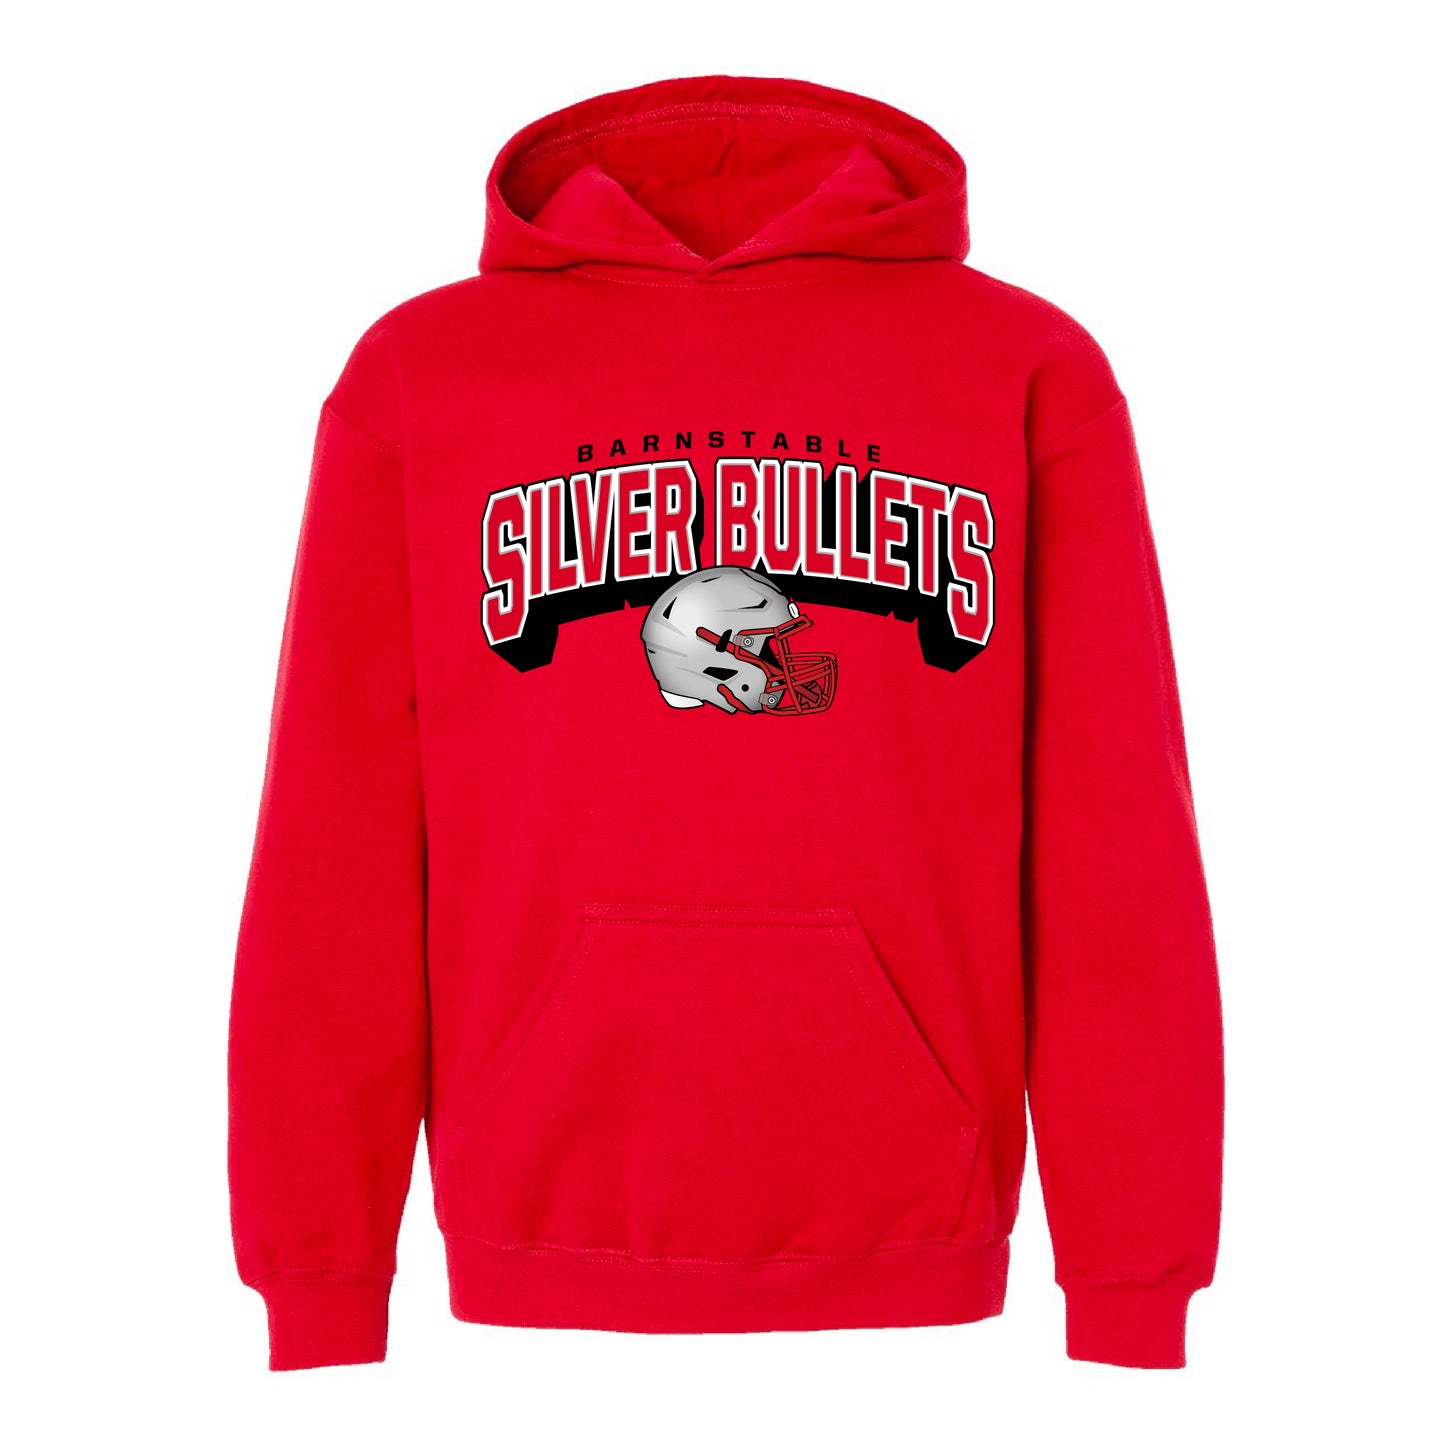 Barnstable Silver Bullets - Youth Hooded Sweatshirt